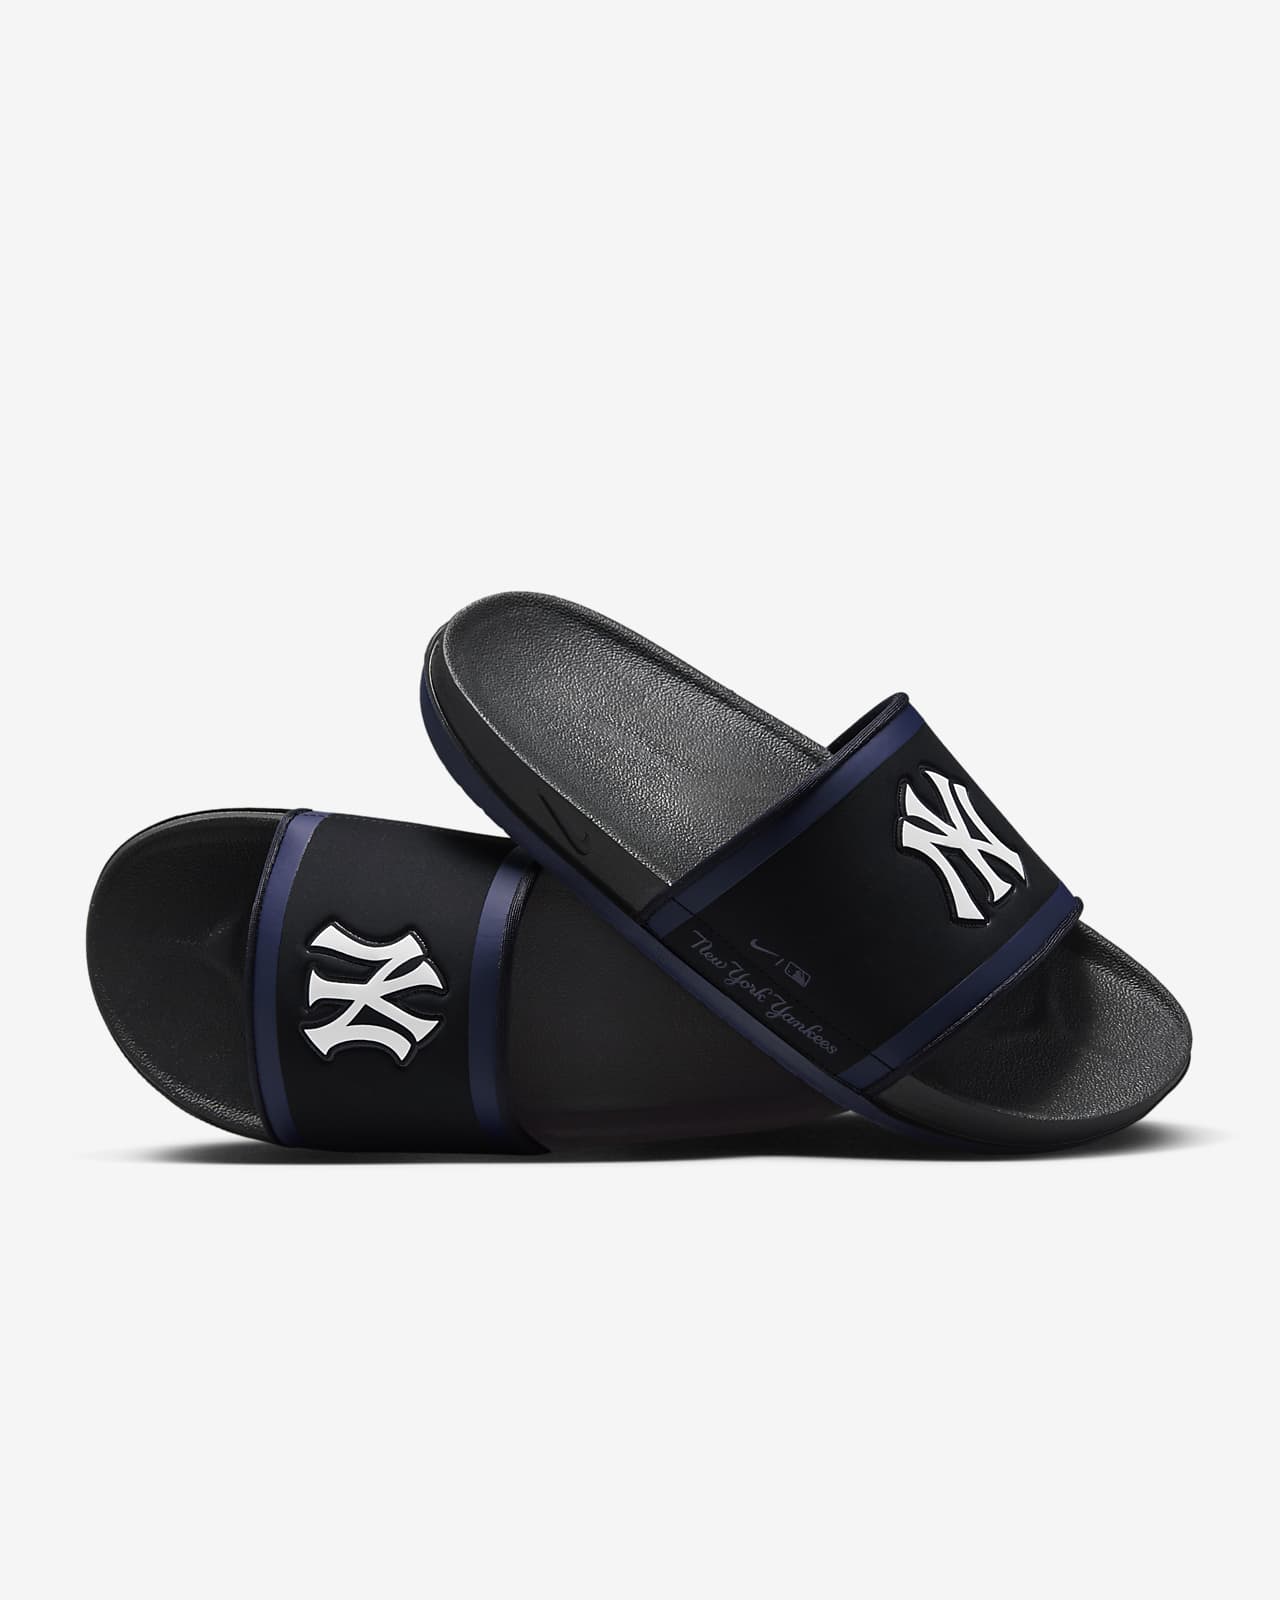 Nike, Shoes, Nike New York Yankees Slides